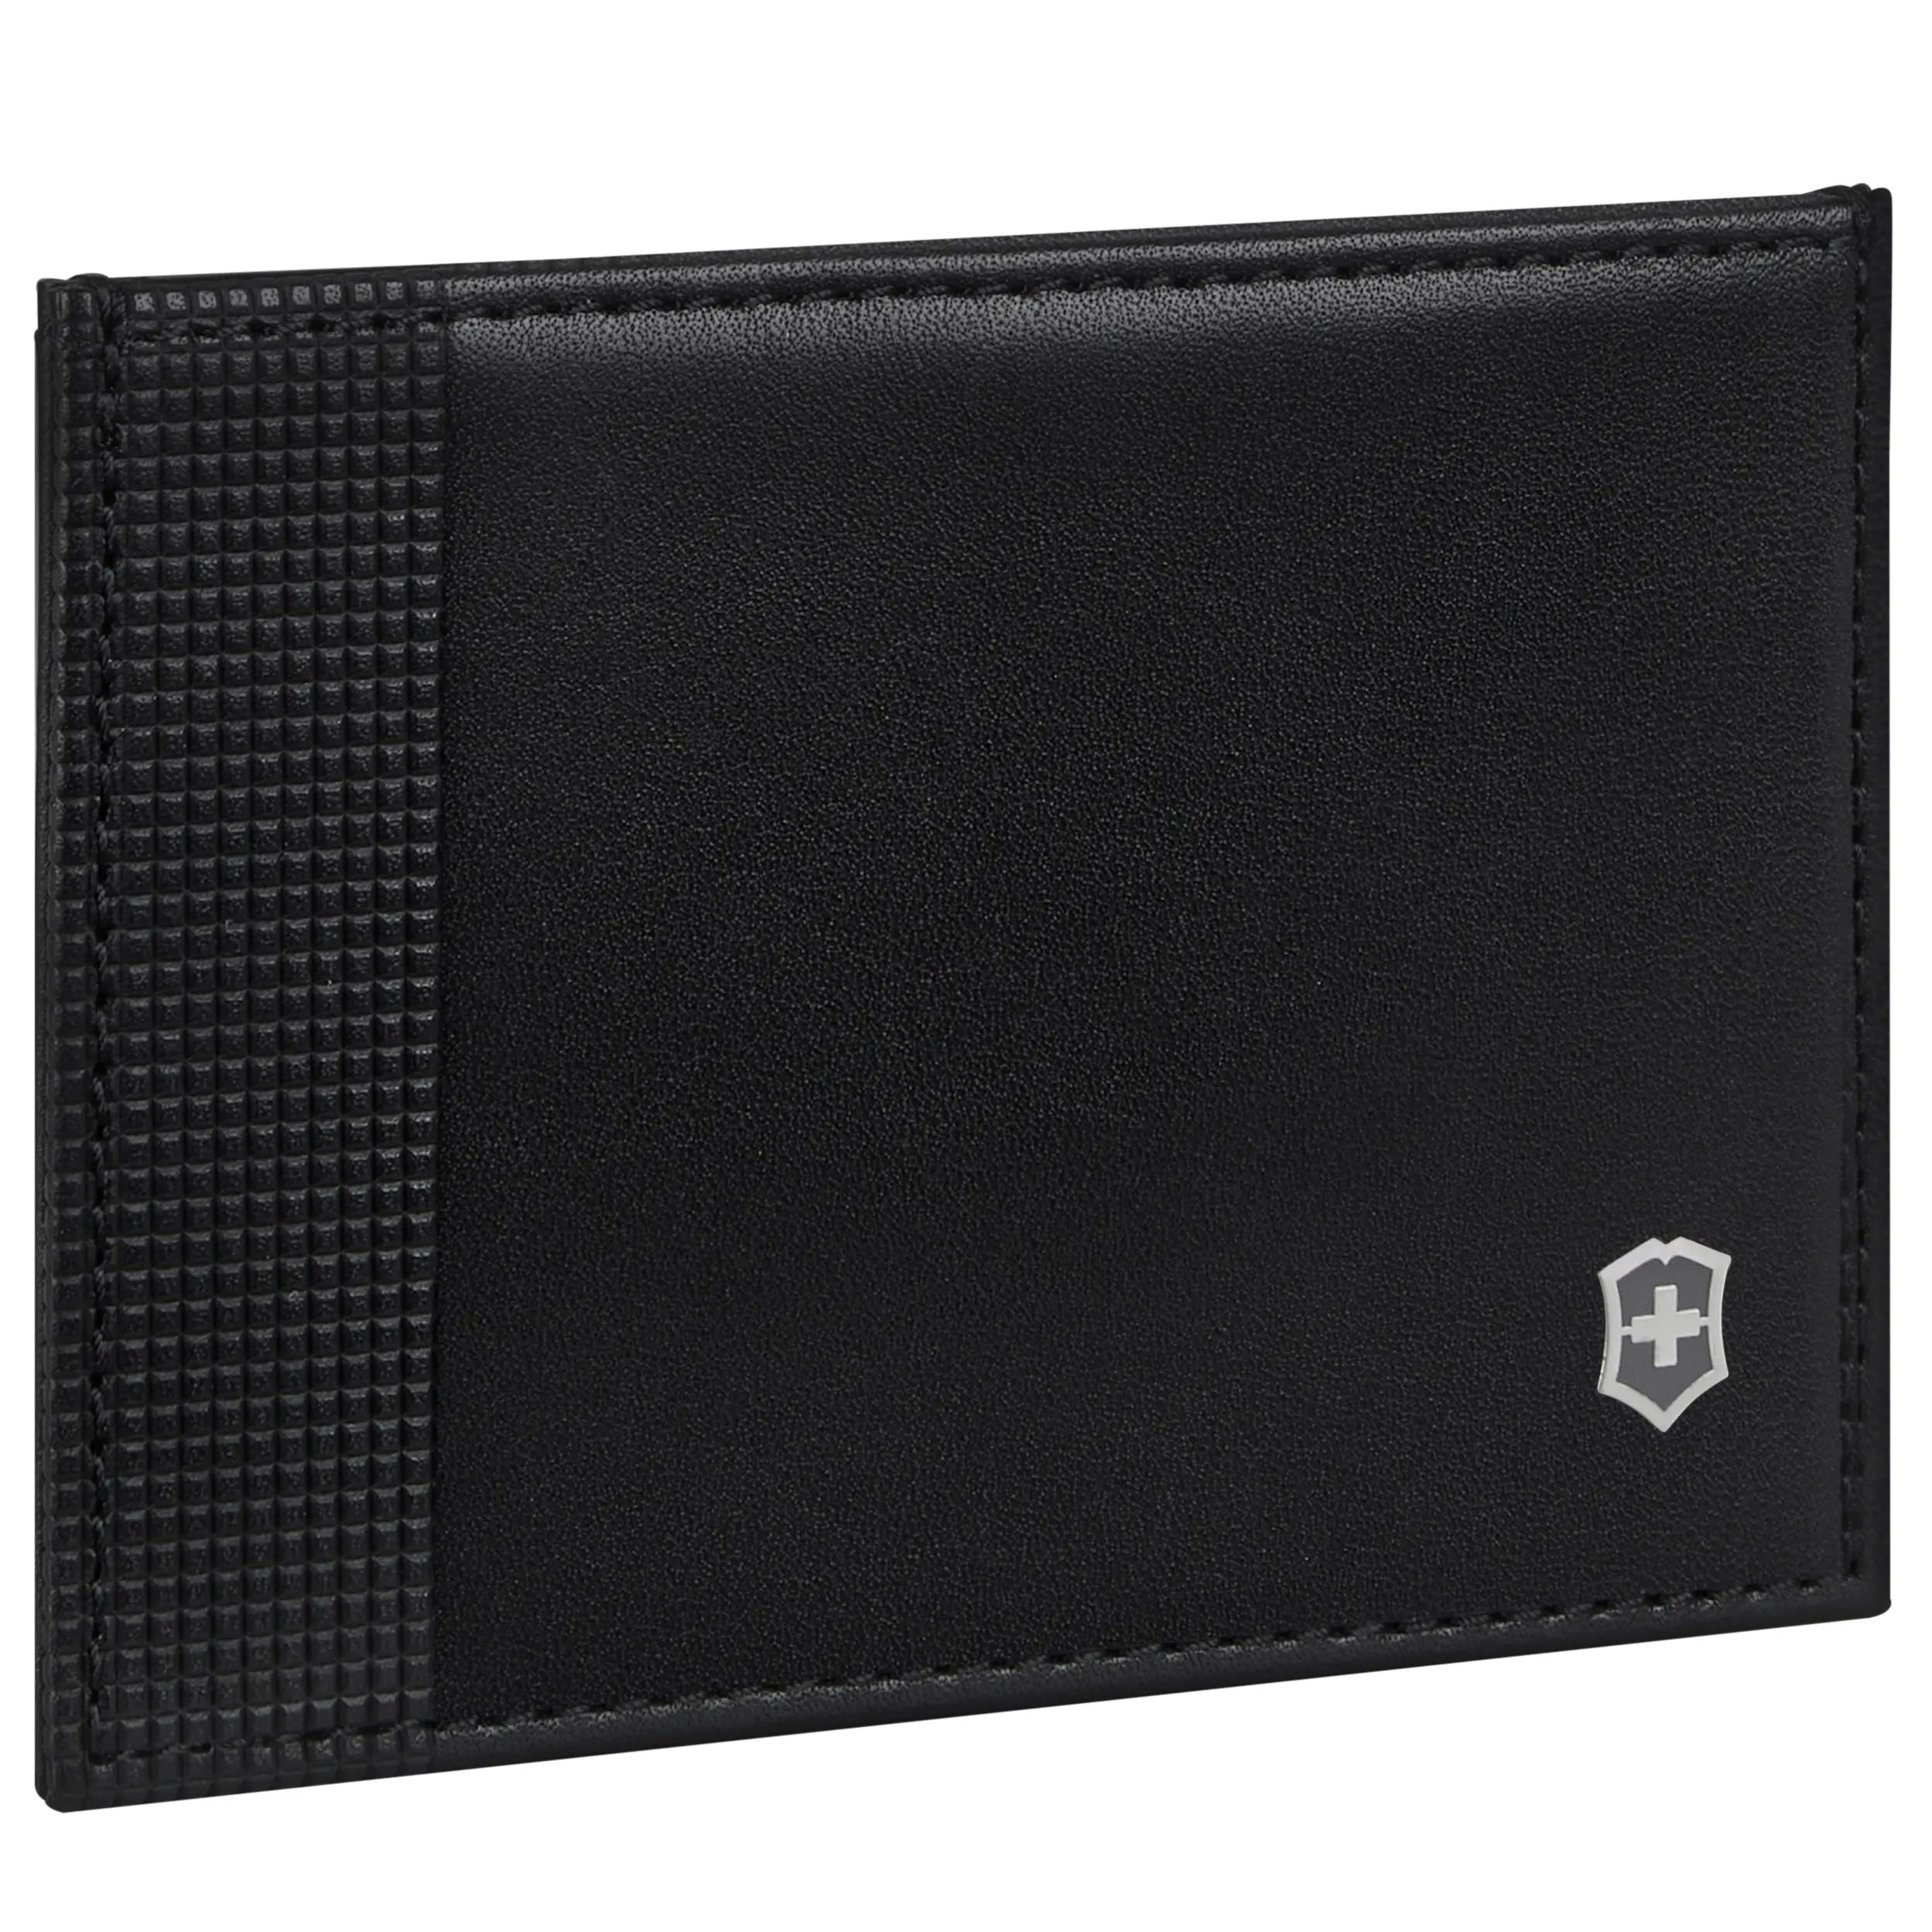 Victorinox Altius Alox Slim Card Case 10 cm - Black